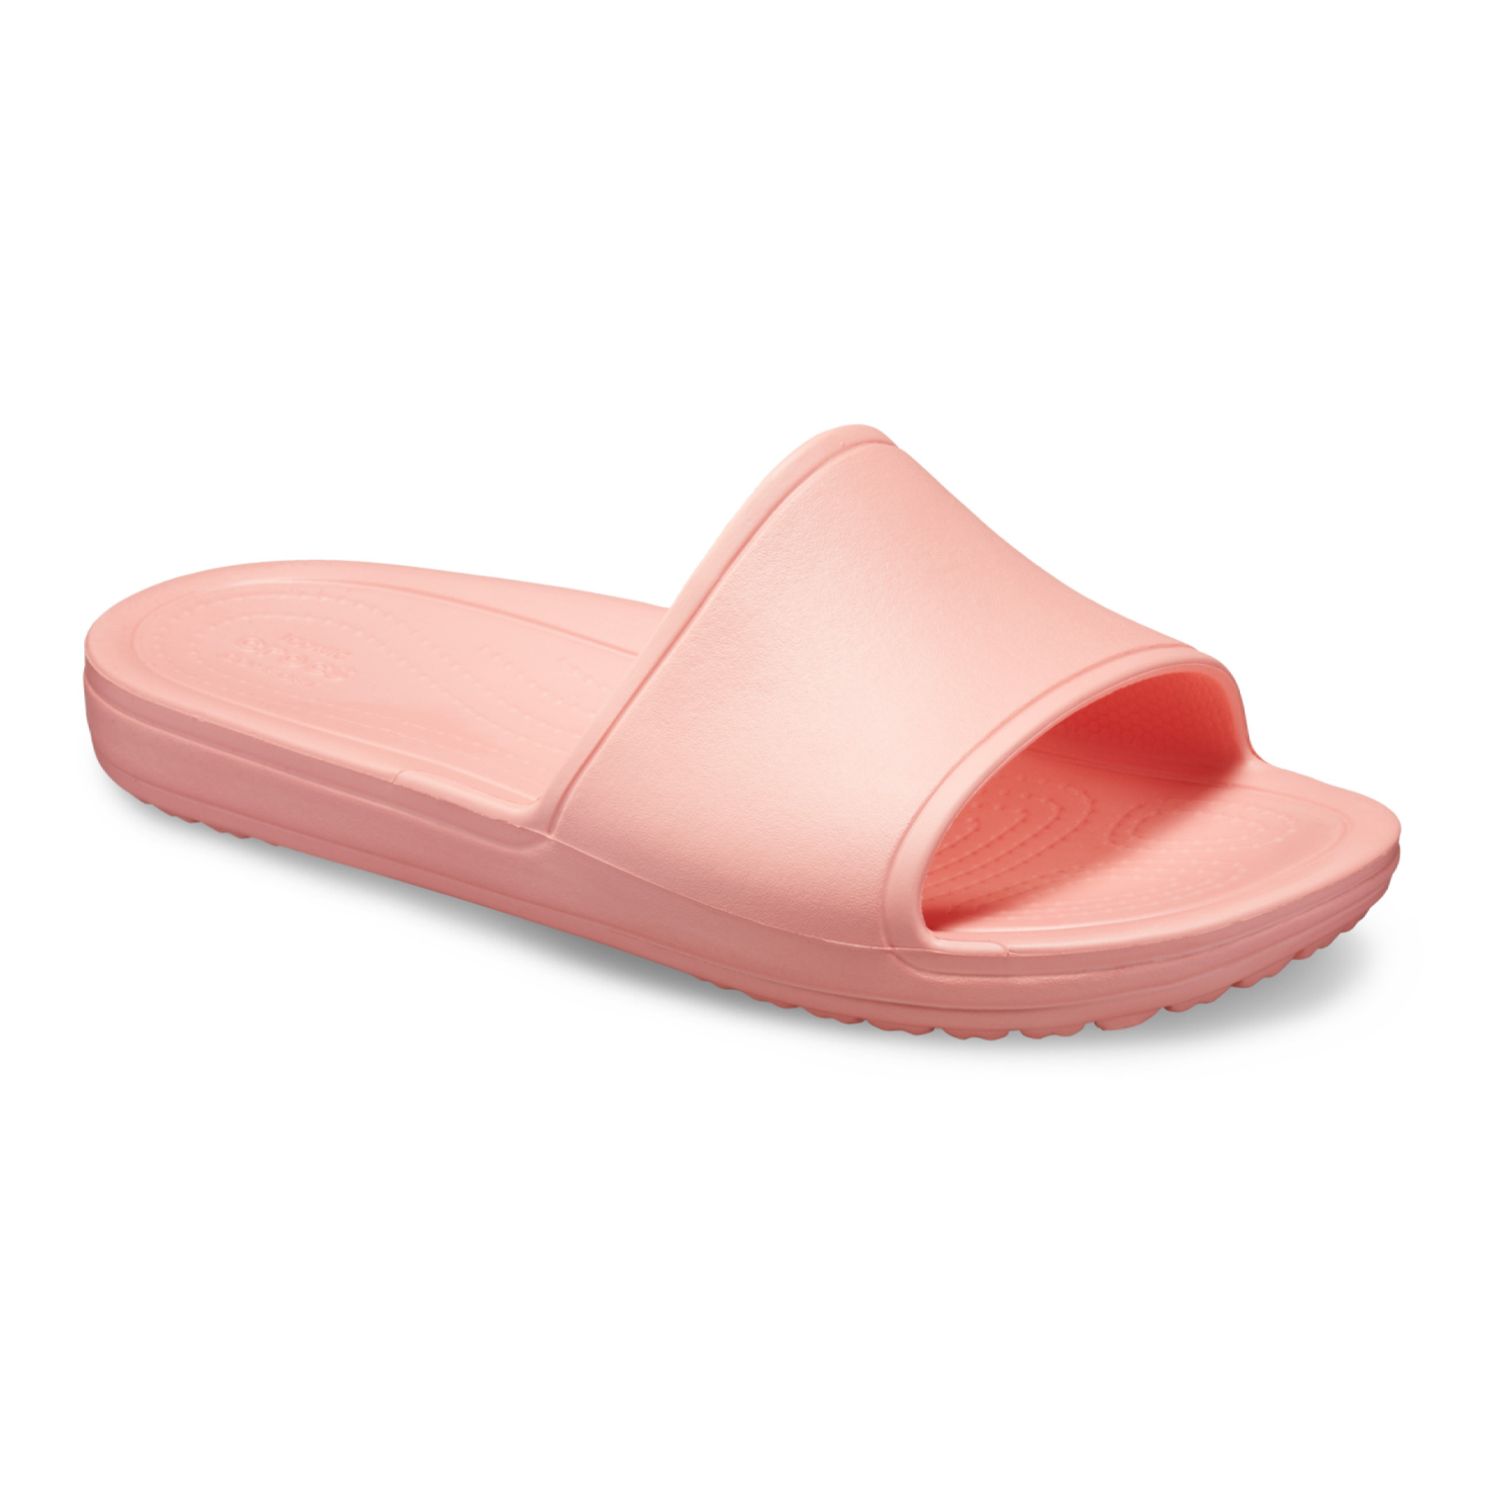 Crocs Sloane Women's Slide Sandals